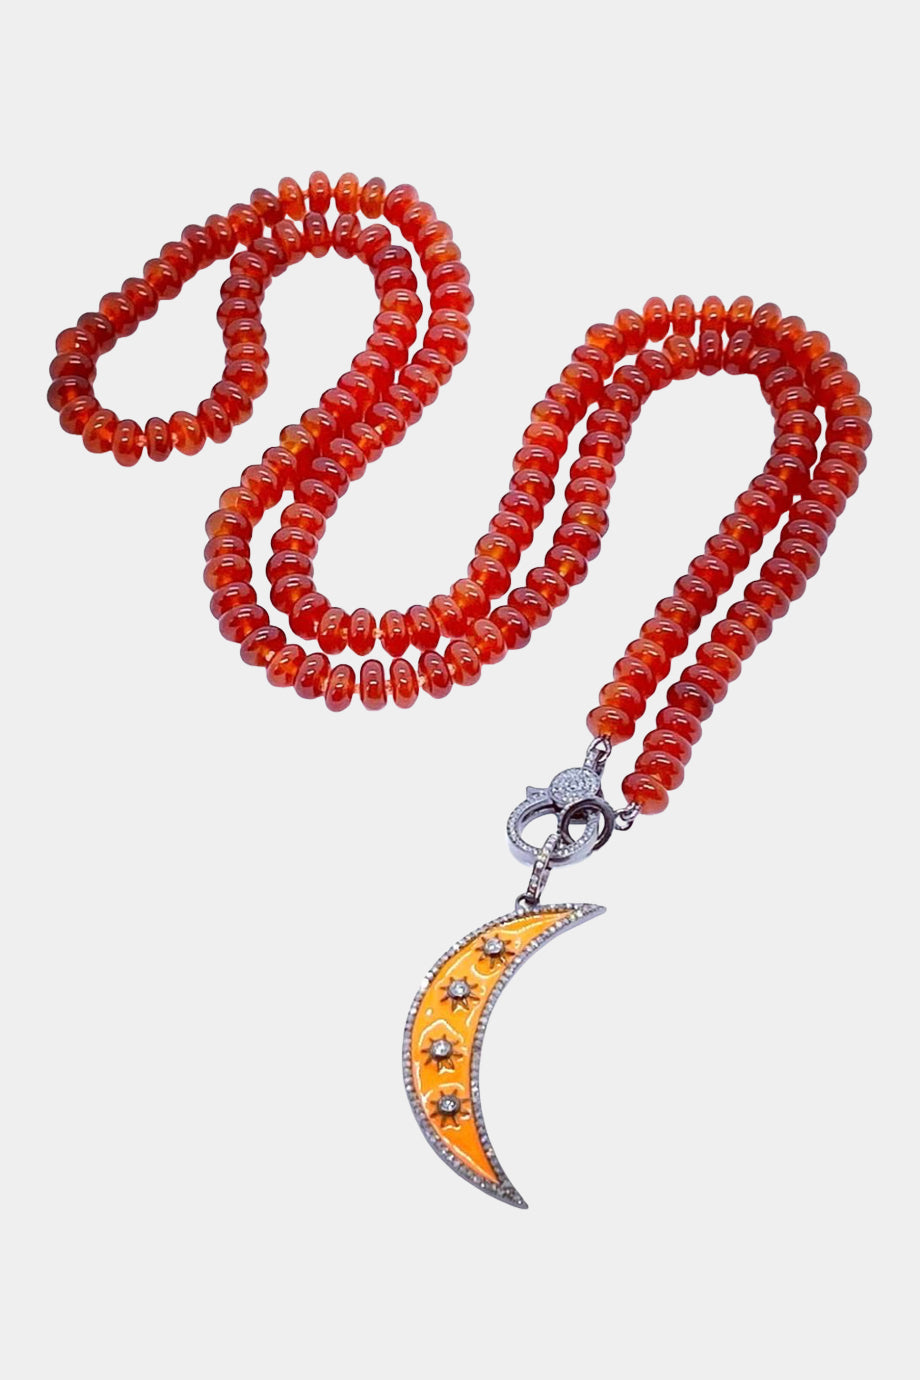 Carnelian Necklace with Orange Moon Pendant